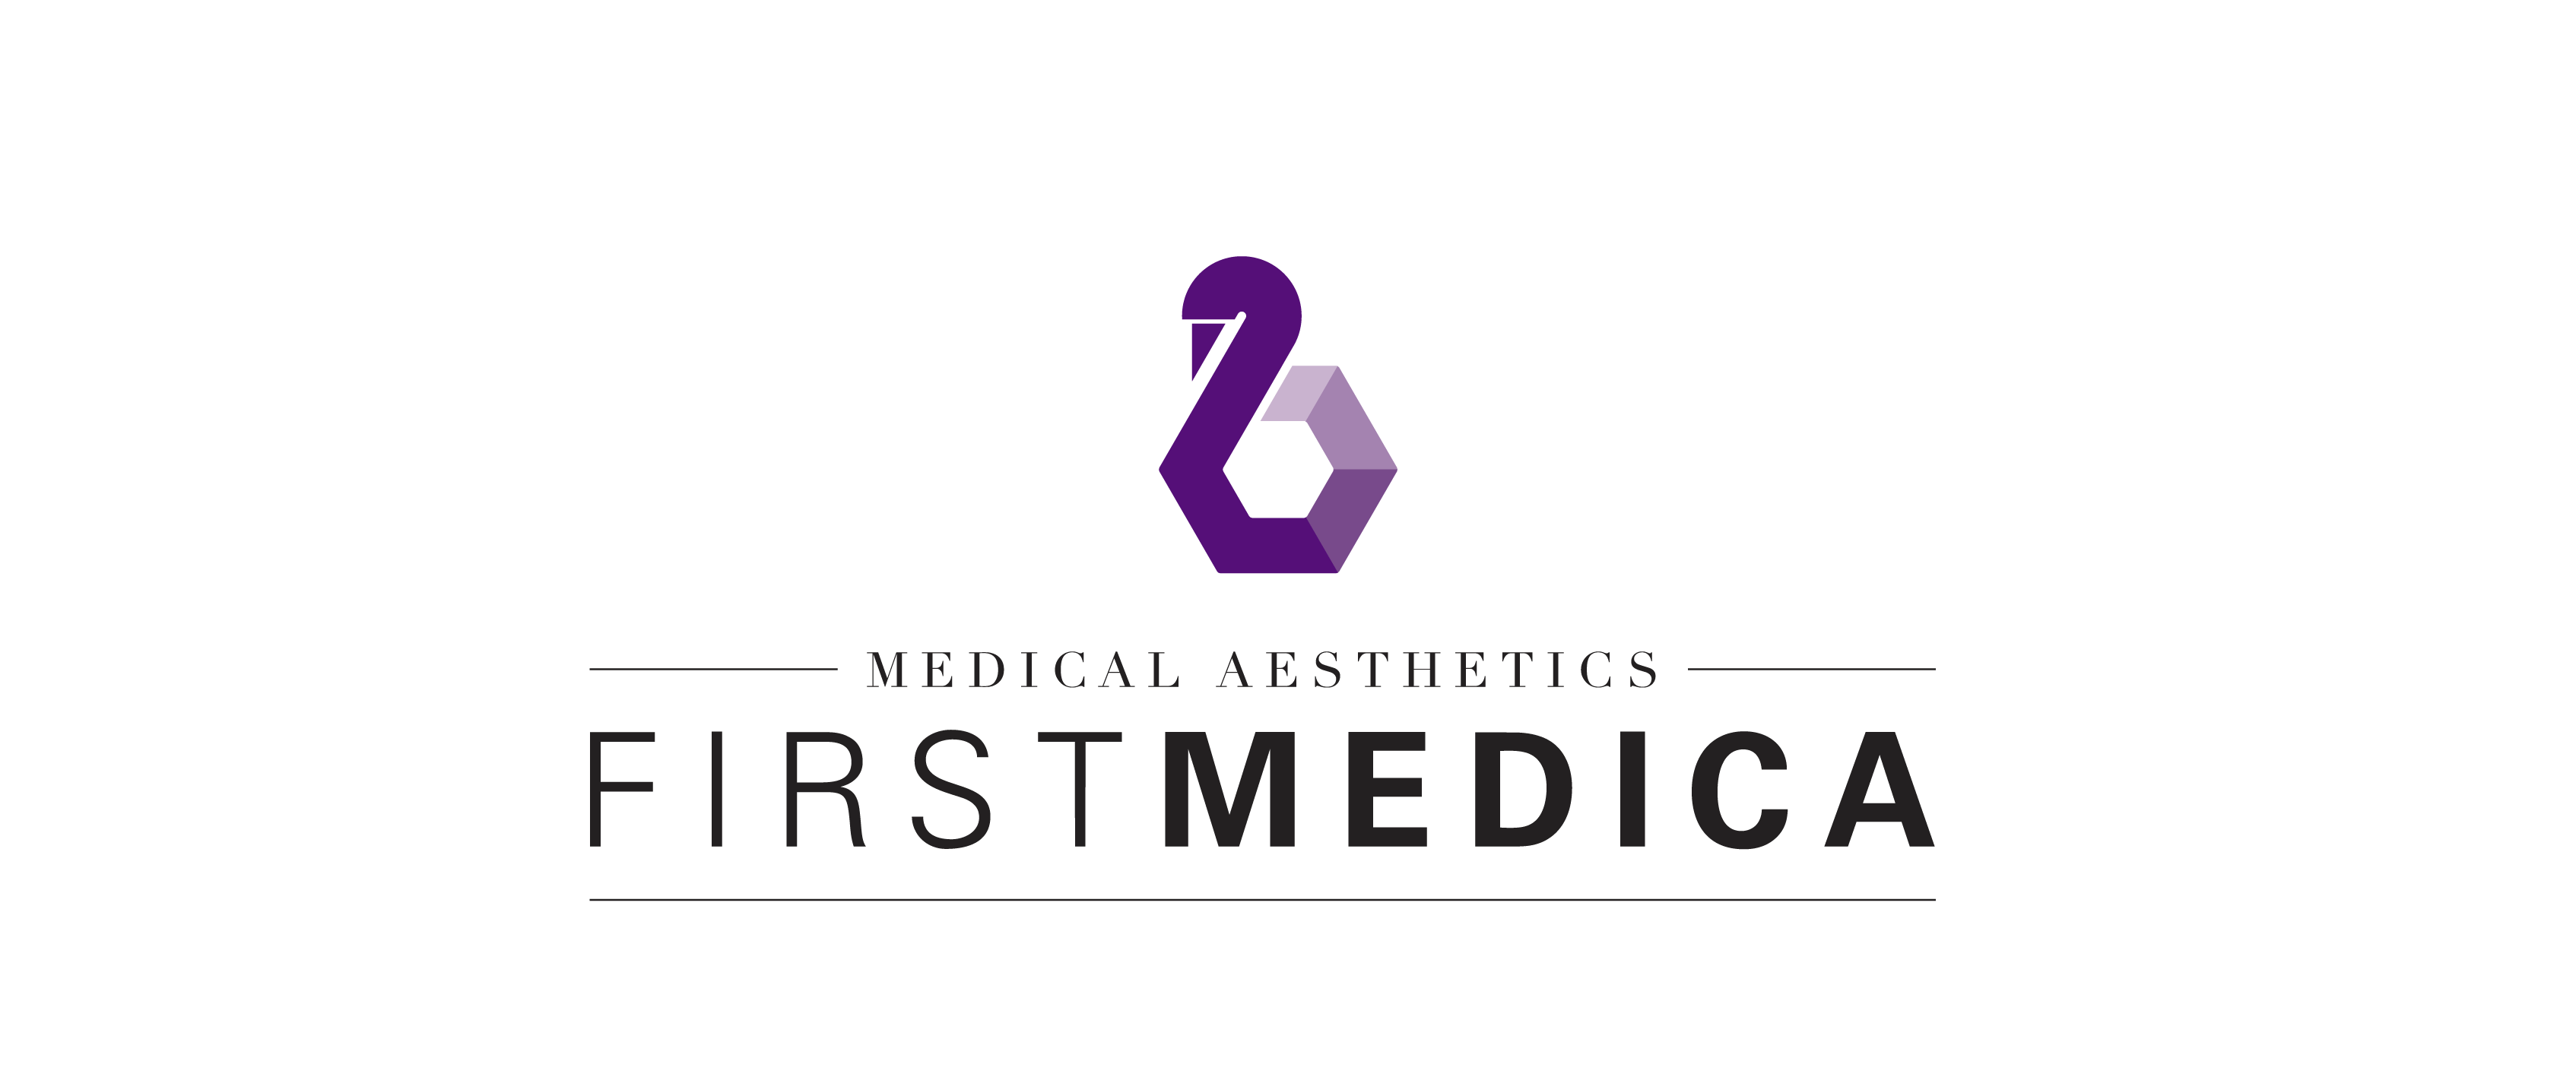 FIRSTMEDICA Logo